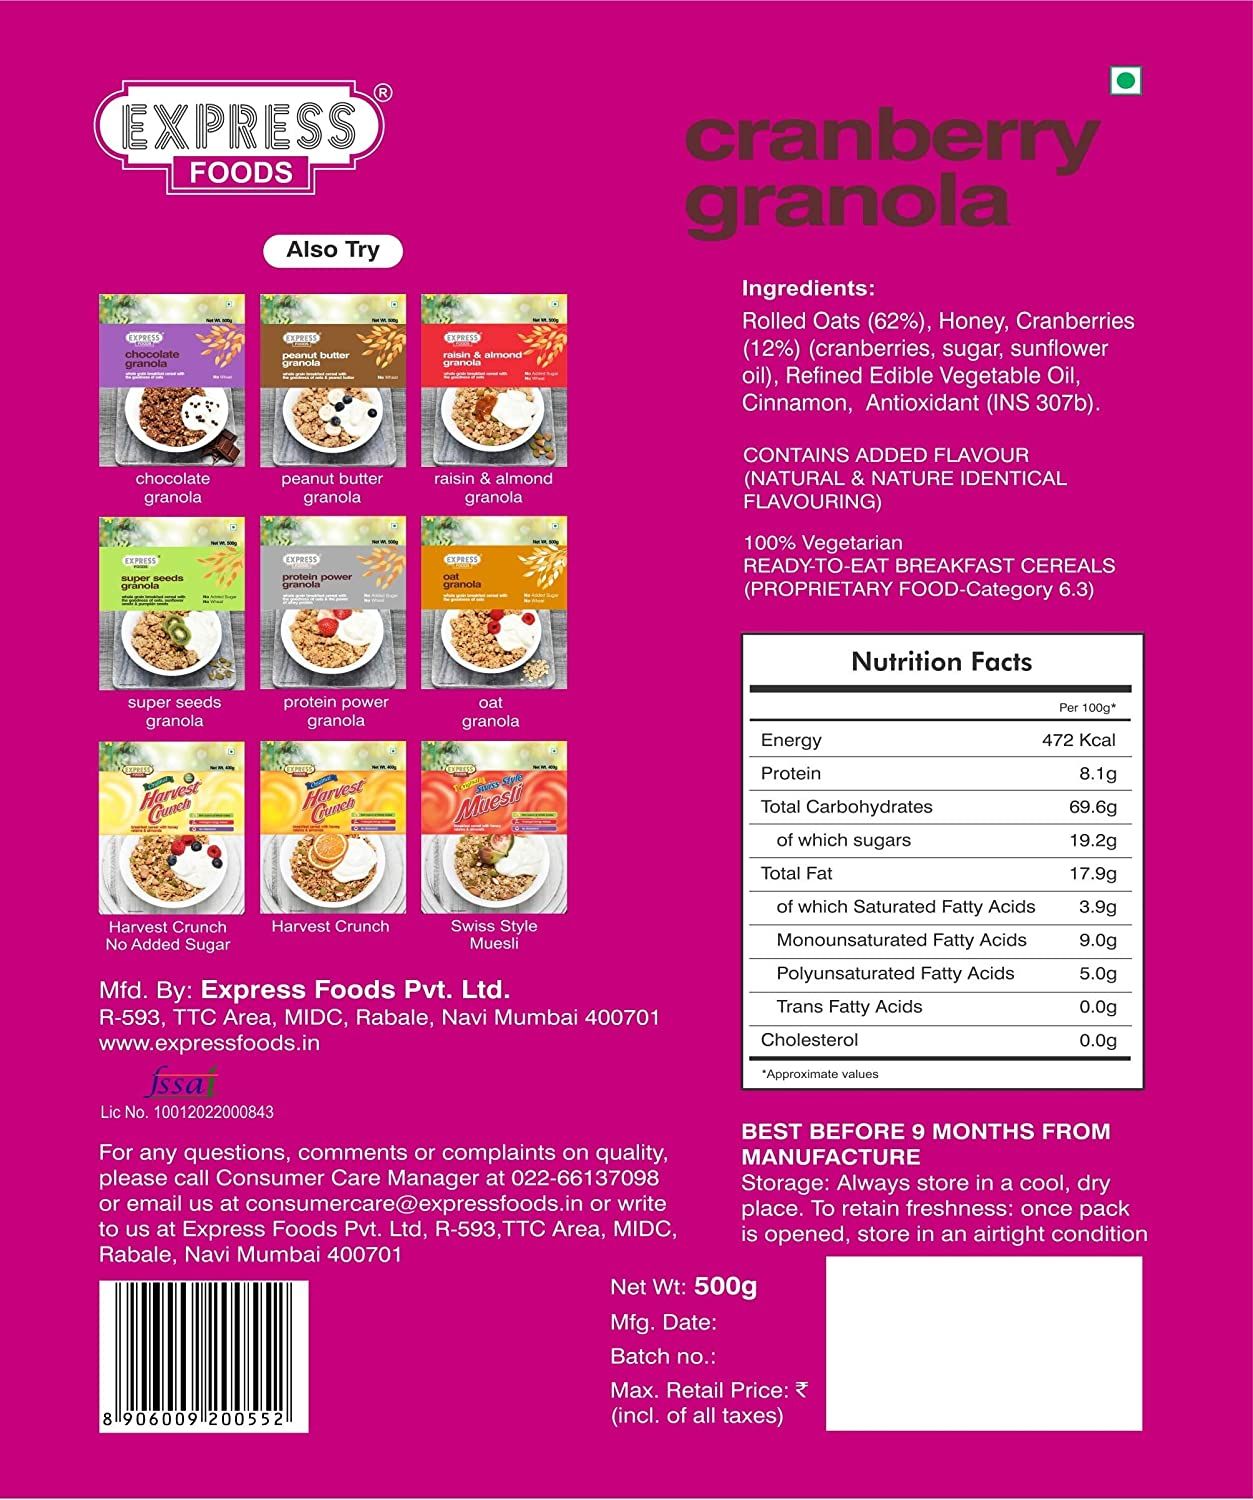 Express Foods Cranberry Granola Image